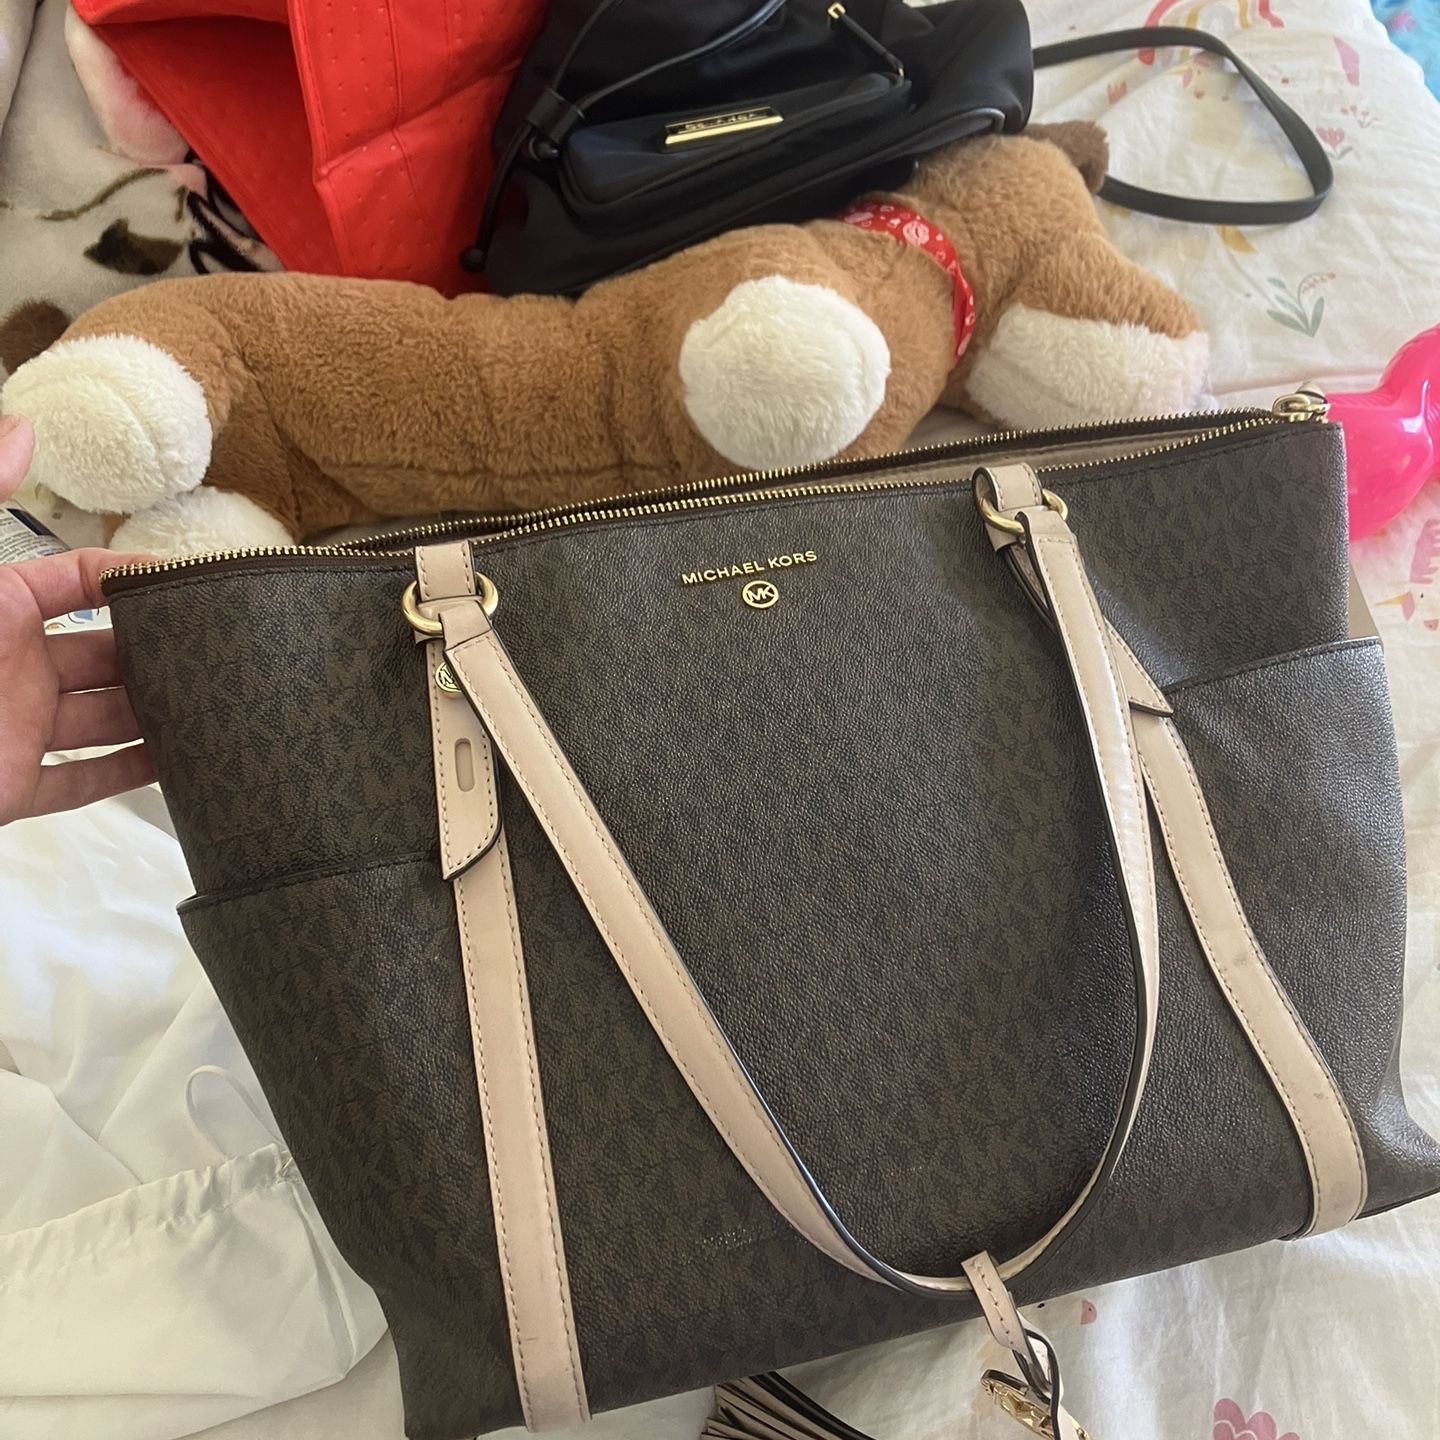 Michael Kors purse n over shoulder bag for Sale in Bakersfield, CA